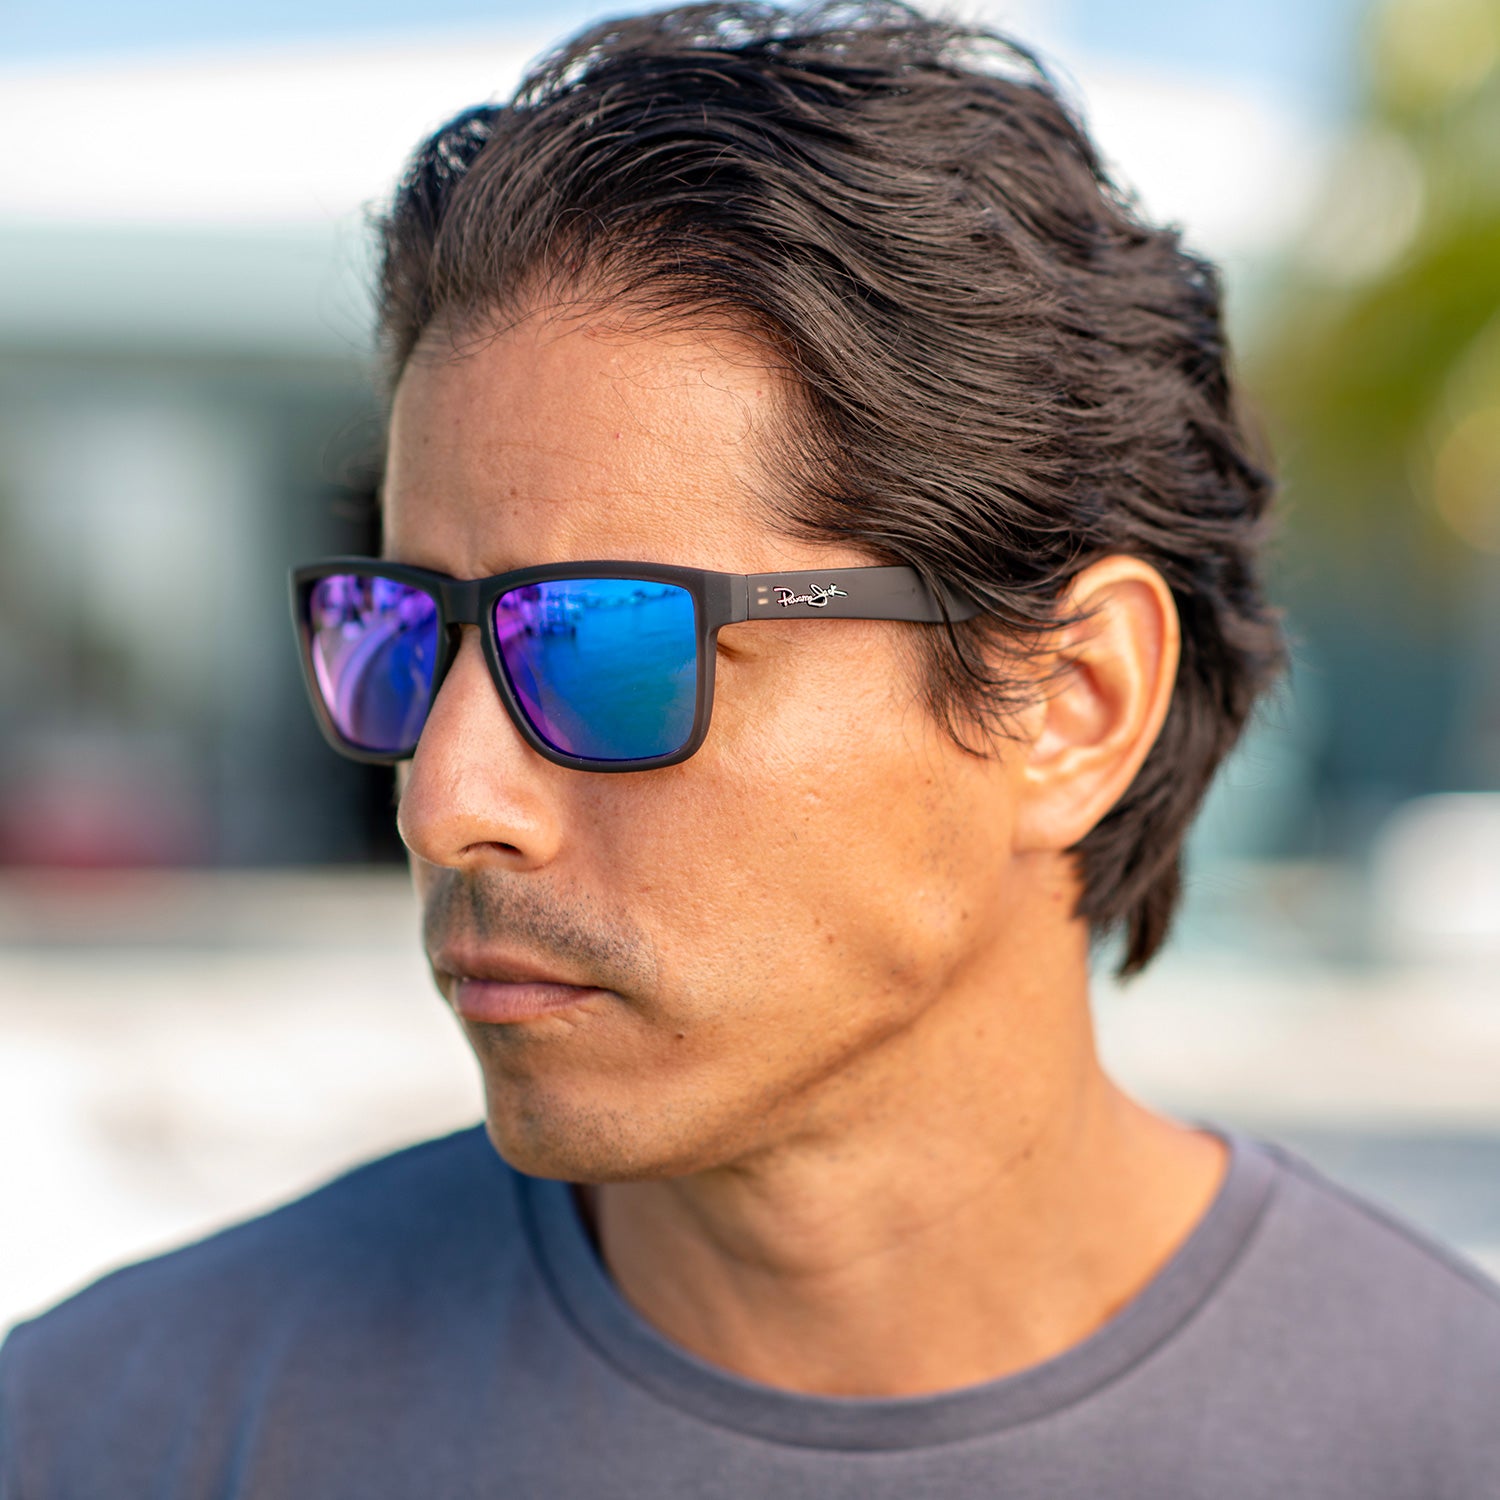 Panama Jack Polarized Classic Sunglasses - Blue Mirror Impact Resistant Lenses, 100% UVA - UVB Sun Protection